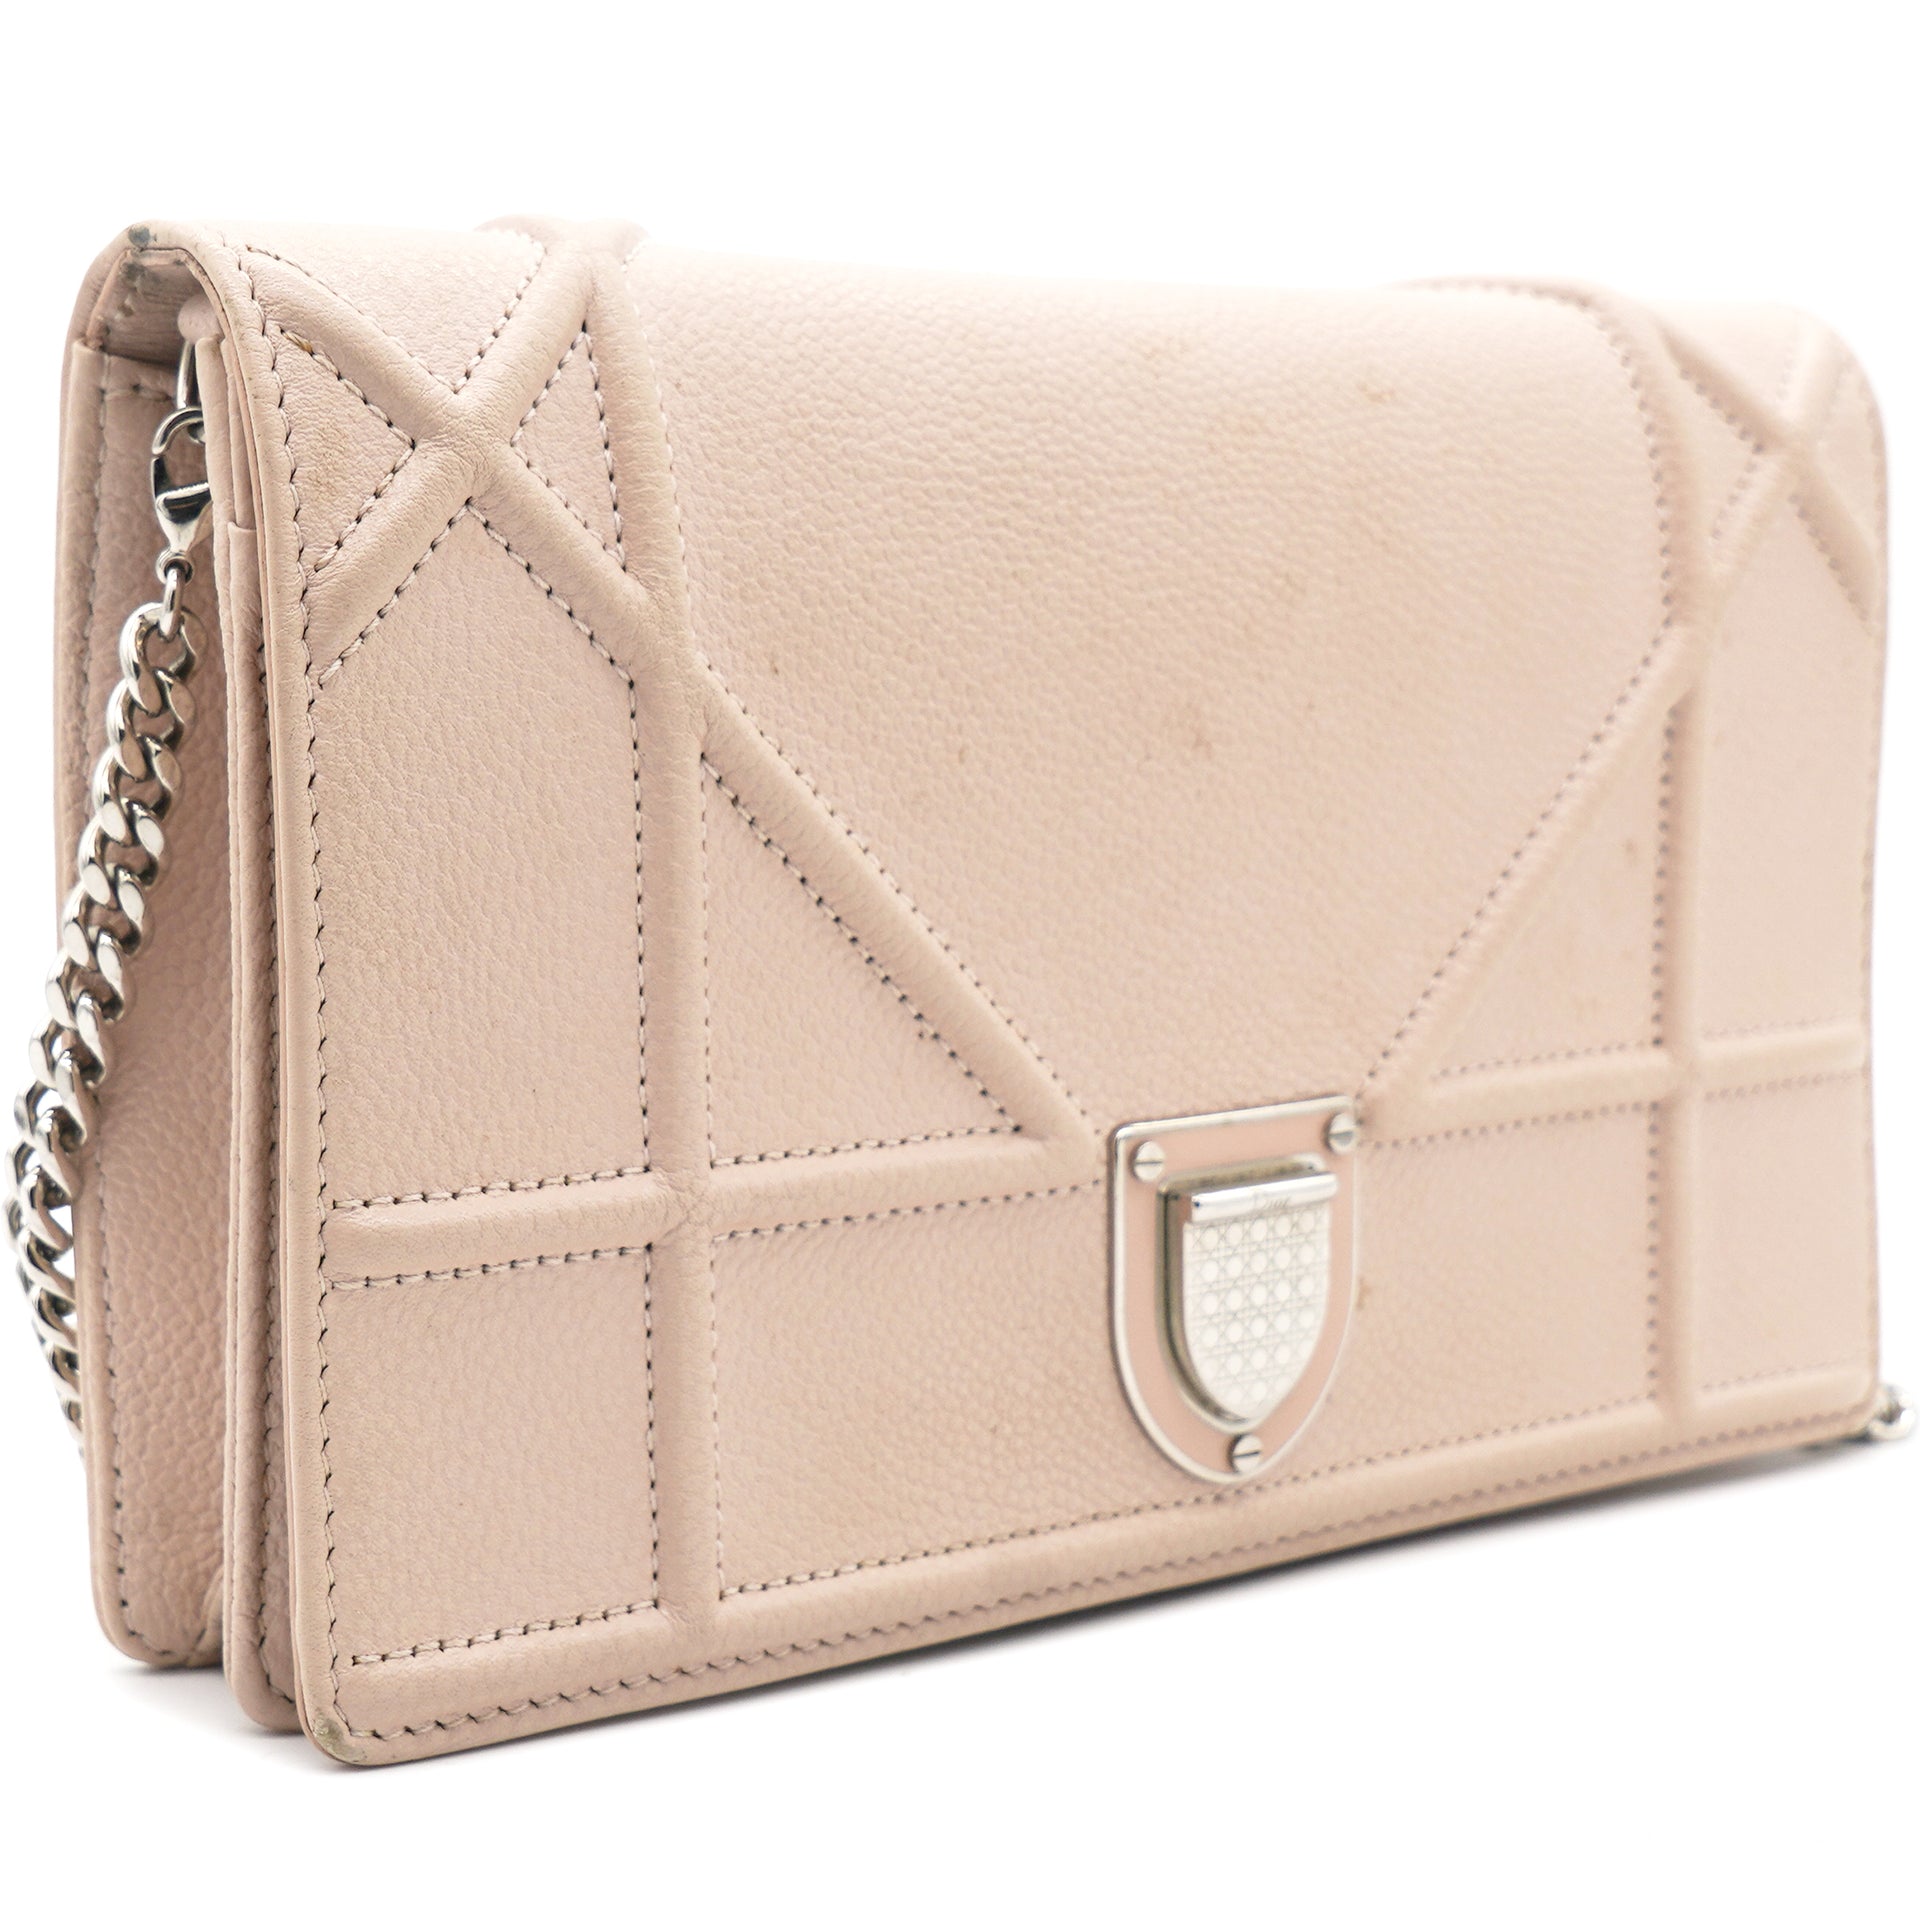 CHRISTIAN DIOR Bag - Diorama Light Pink Calfskin Shoulder Bag